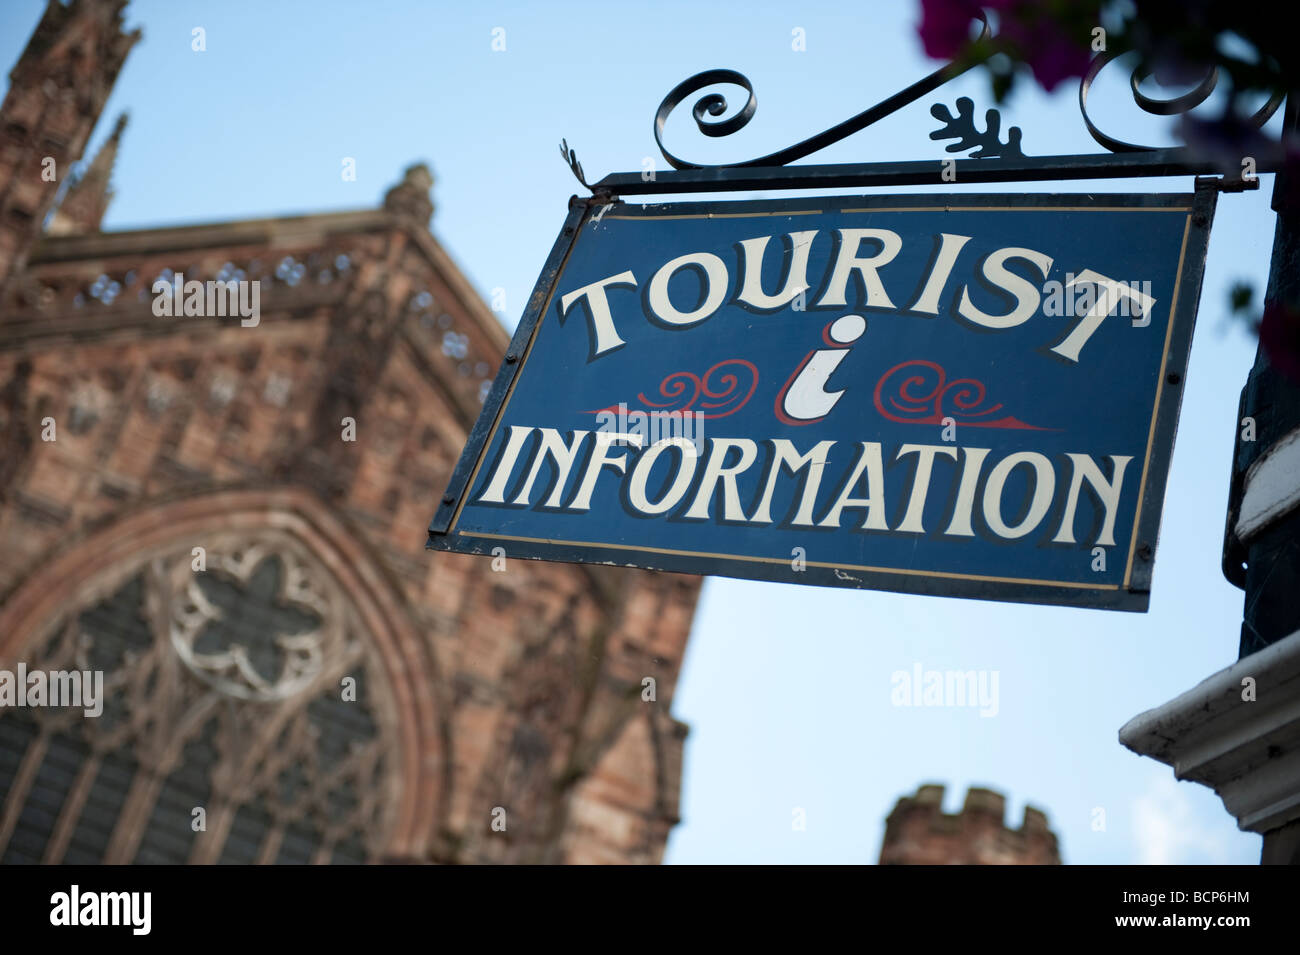 Informations touristiques sur signer en face de la cathédrale de Hereford Hereford Herefordshire Angleterre Royaume-uni ville Banque D'Images